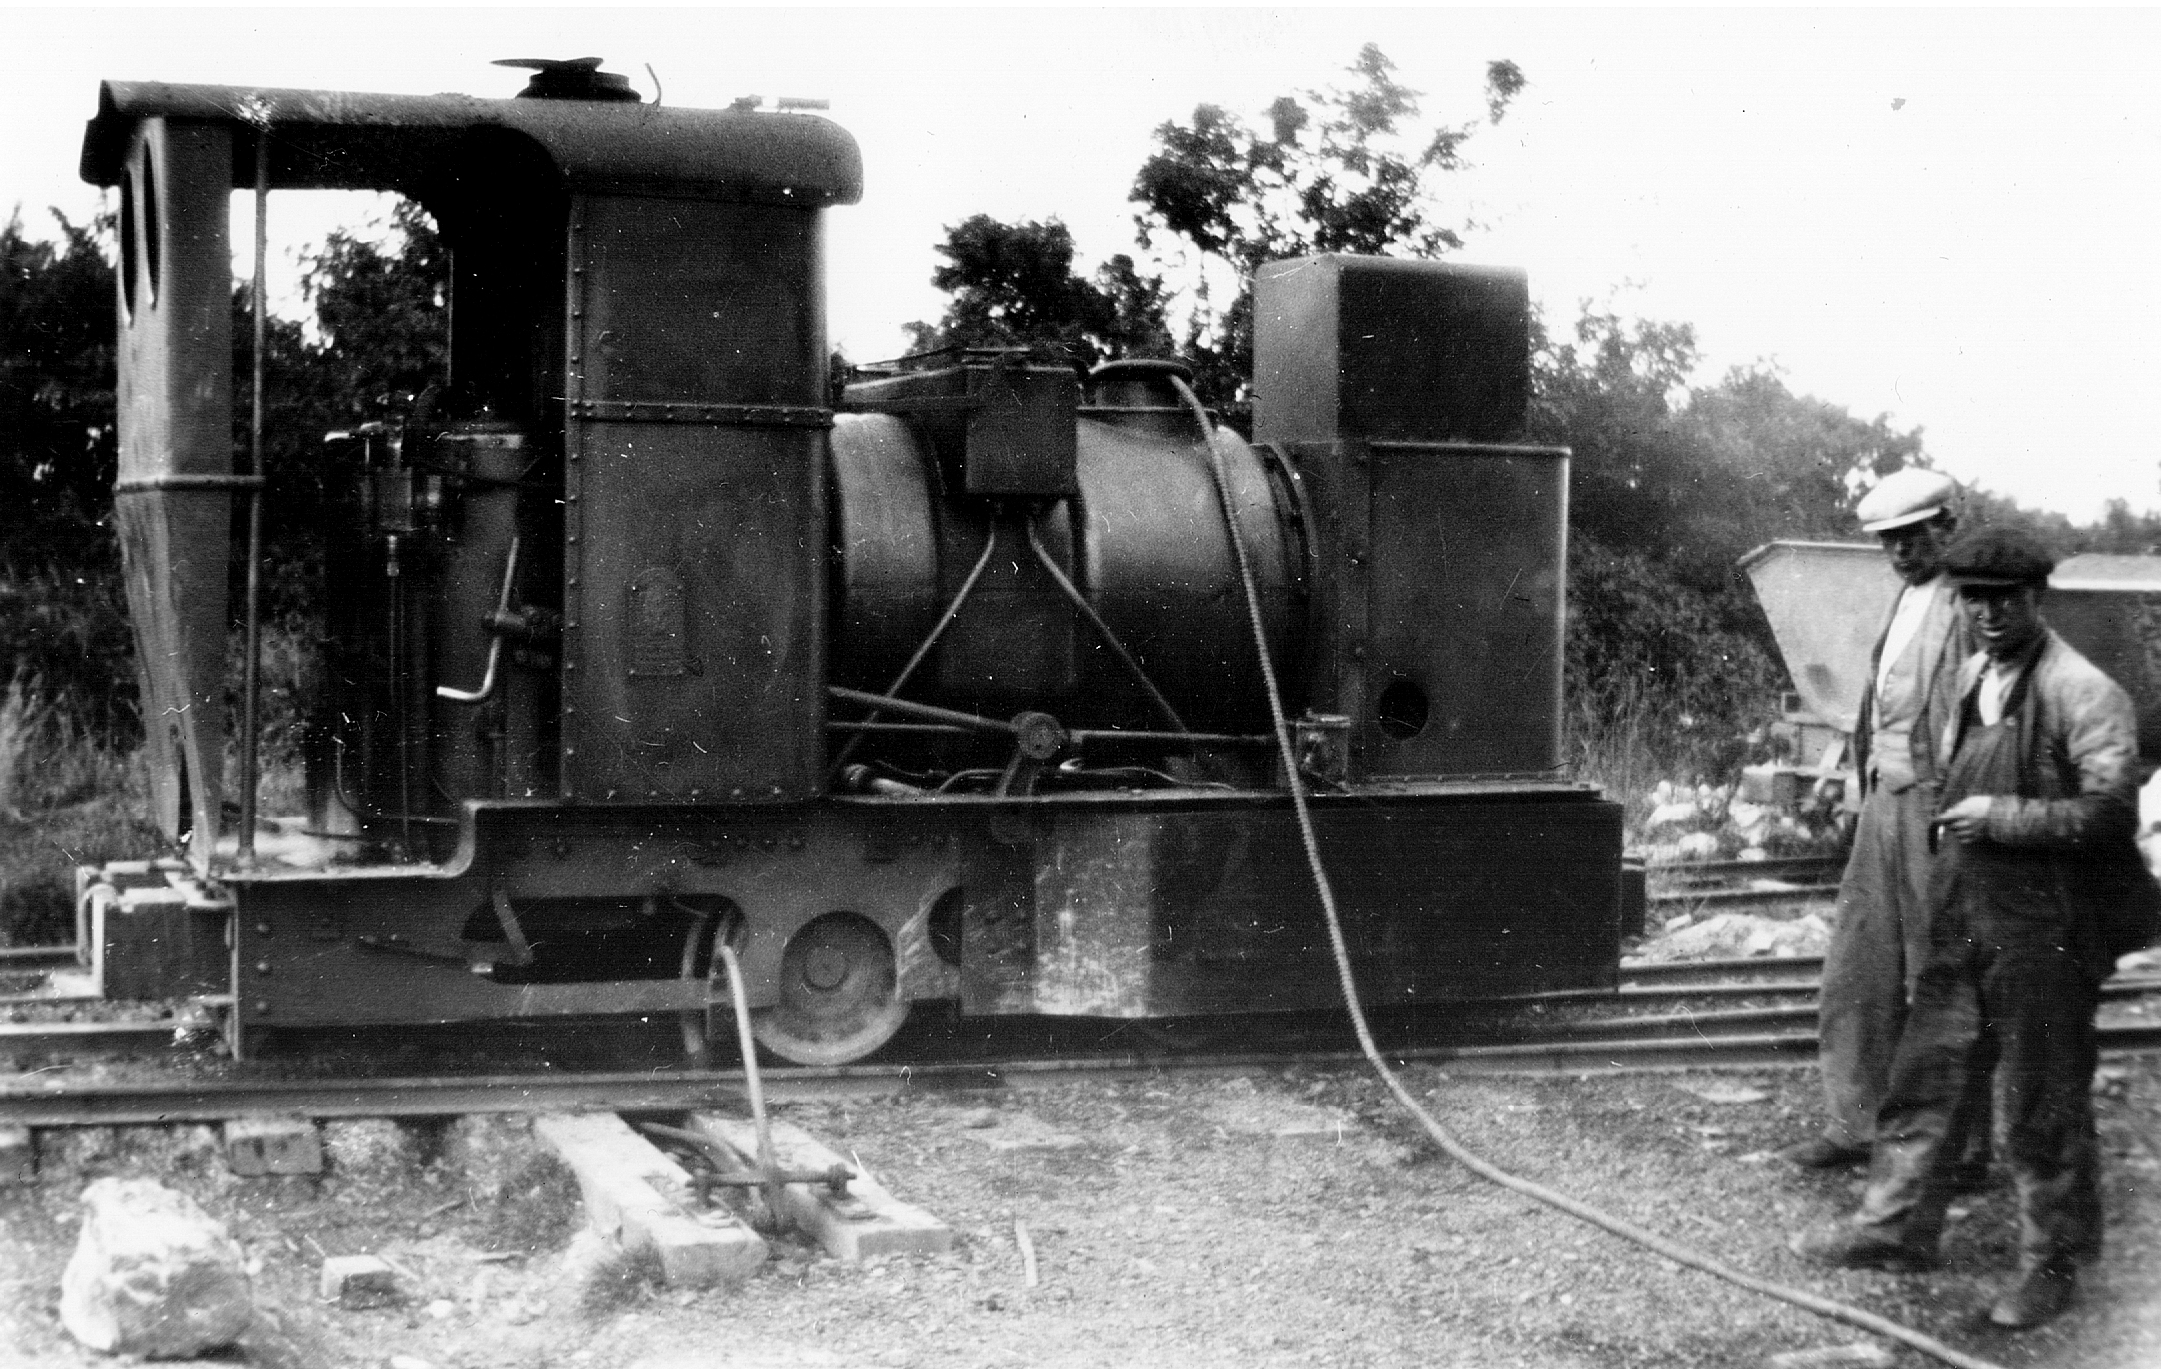 V Bradley Collection 8-05 1930 0-4-0 fireless loco at Raynes quarry Llysfaen Orig S6901 Neg No 9704.jpg